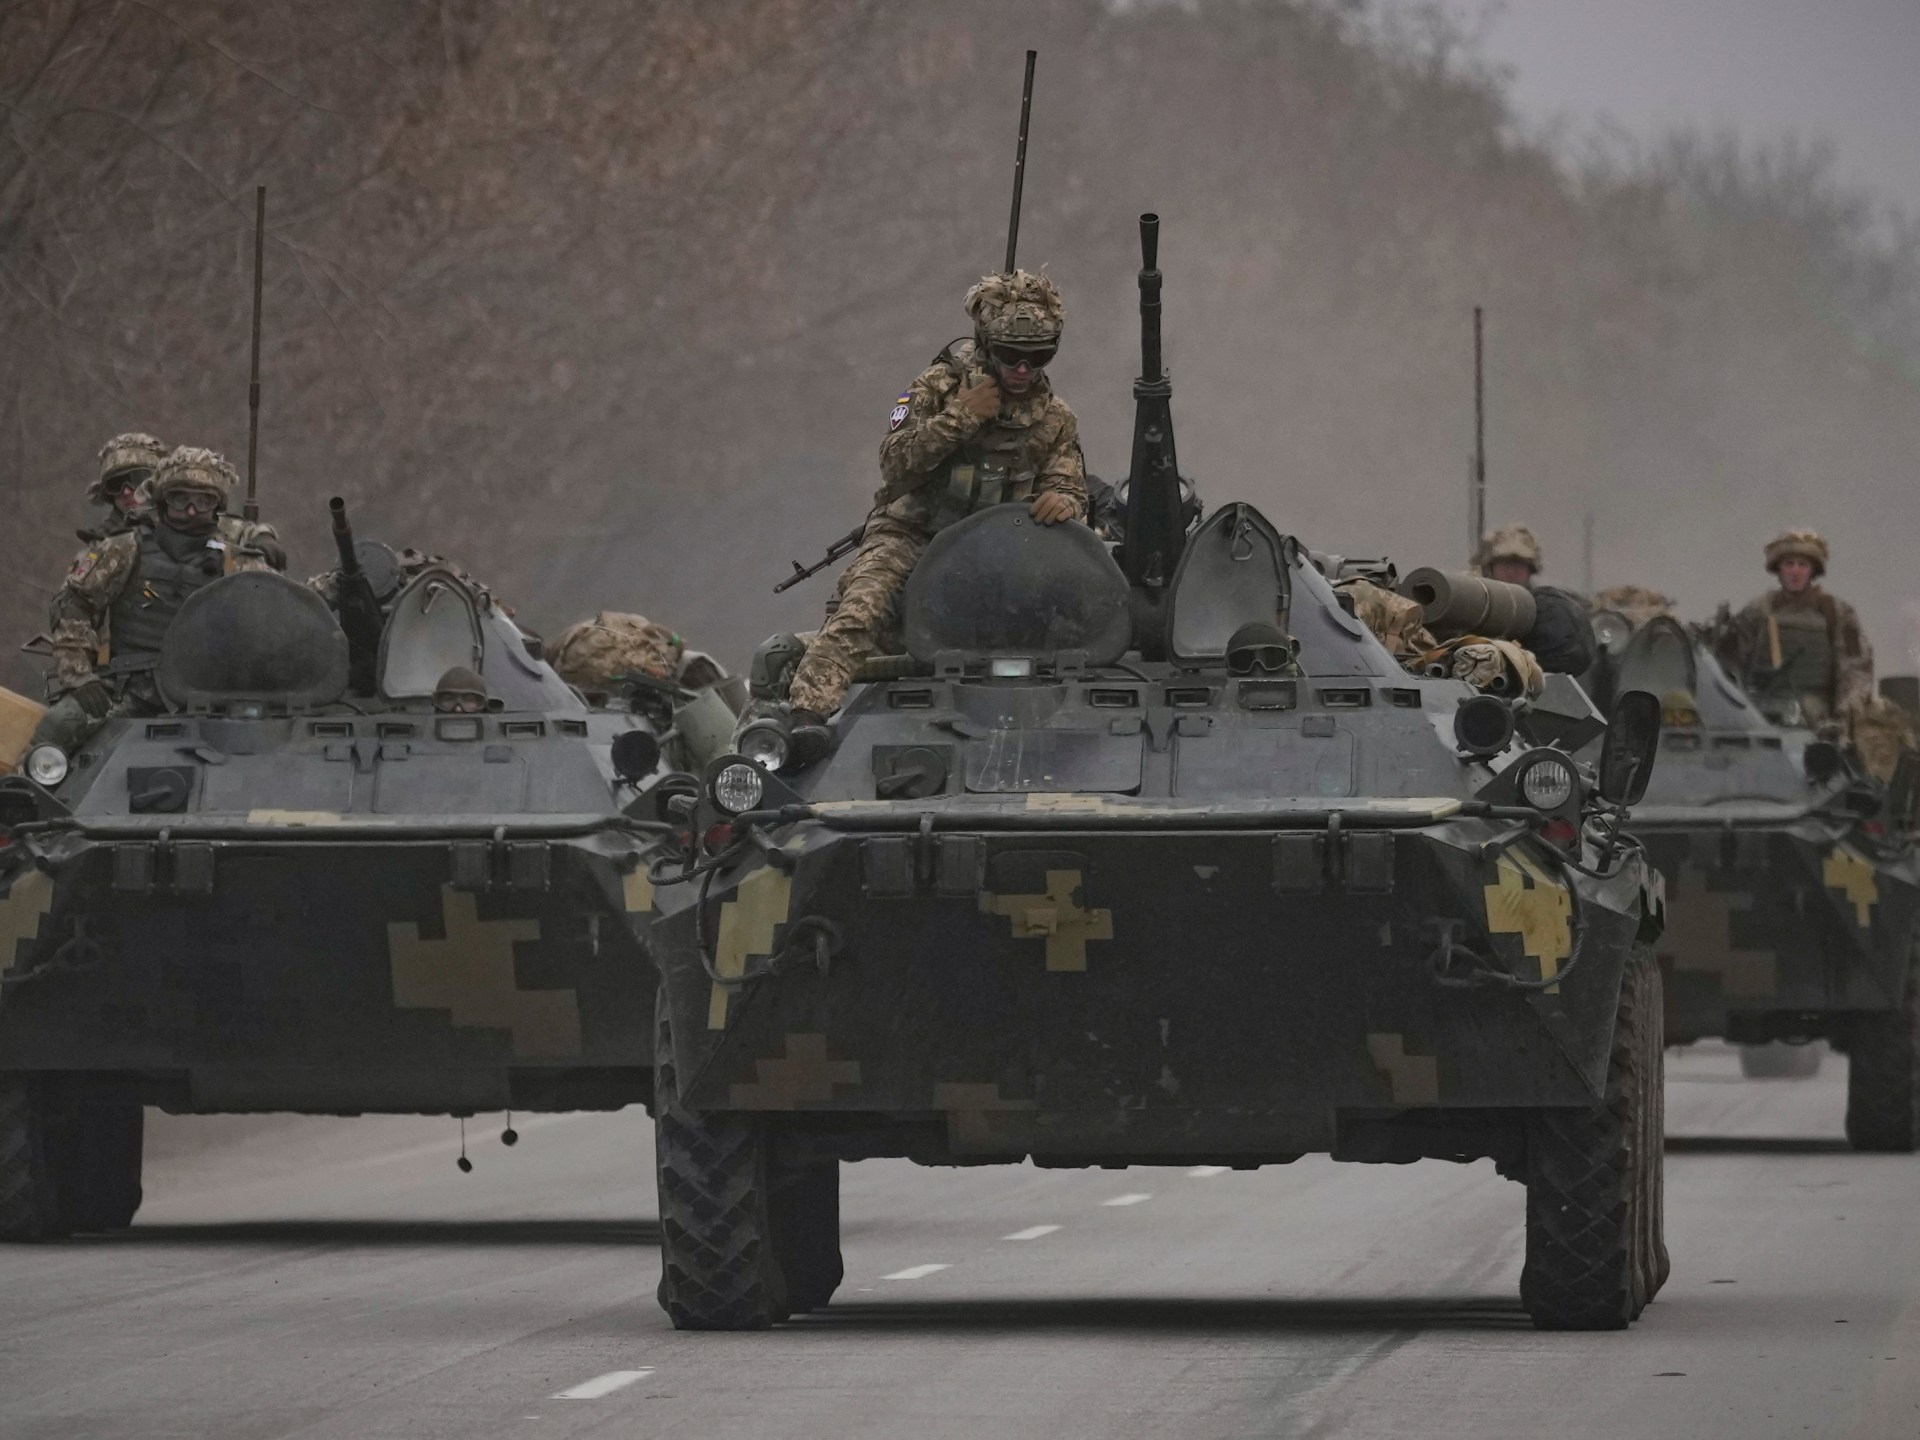 Jerman mengirimkan pengangkut personel lapis baja dan baterai Patriot ke Ukraina |  Berita tentang perang antara Rusia dan Ukraina